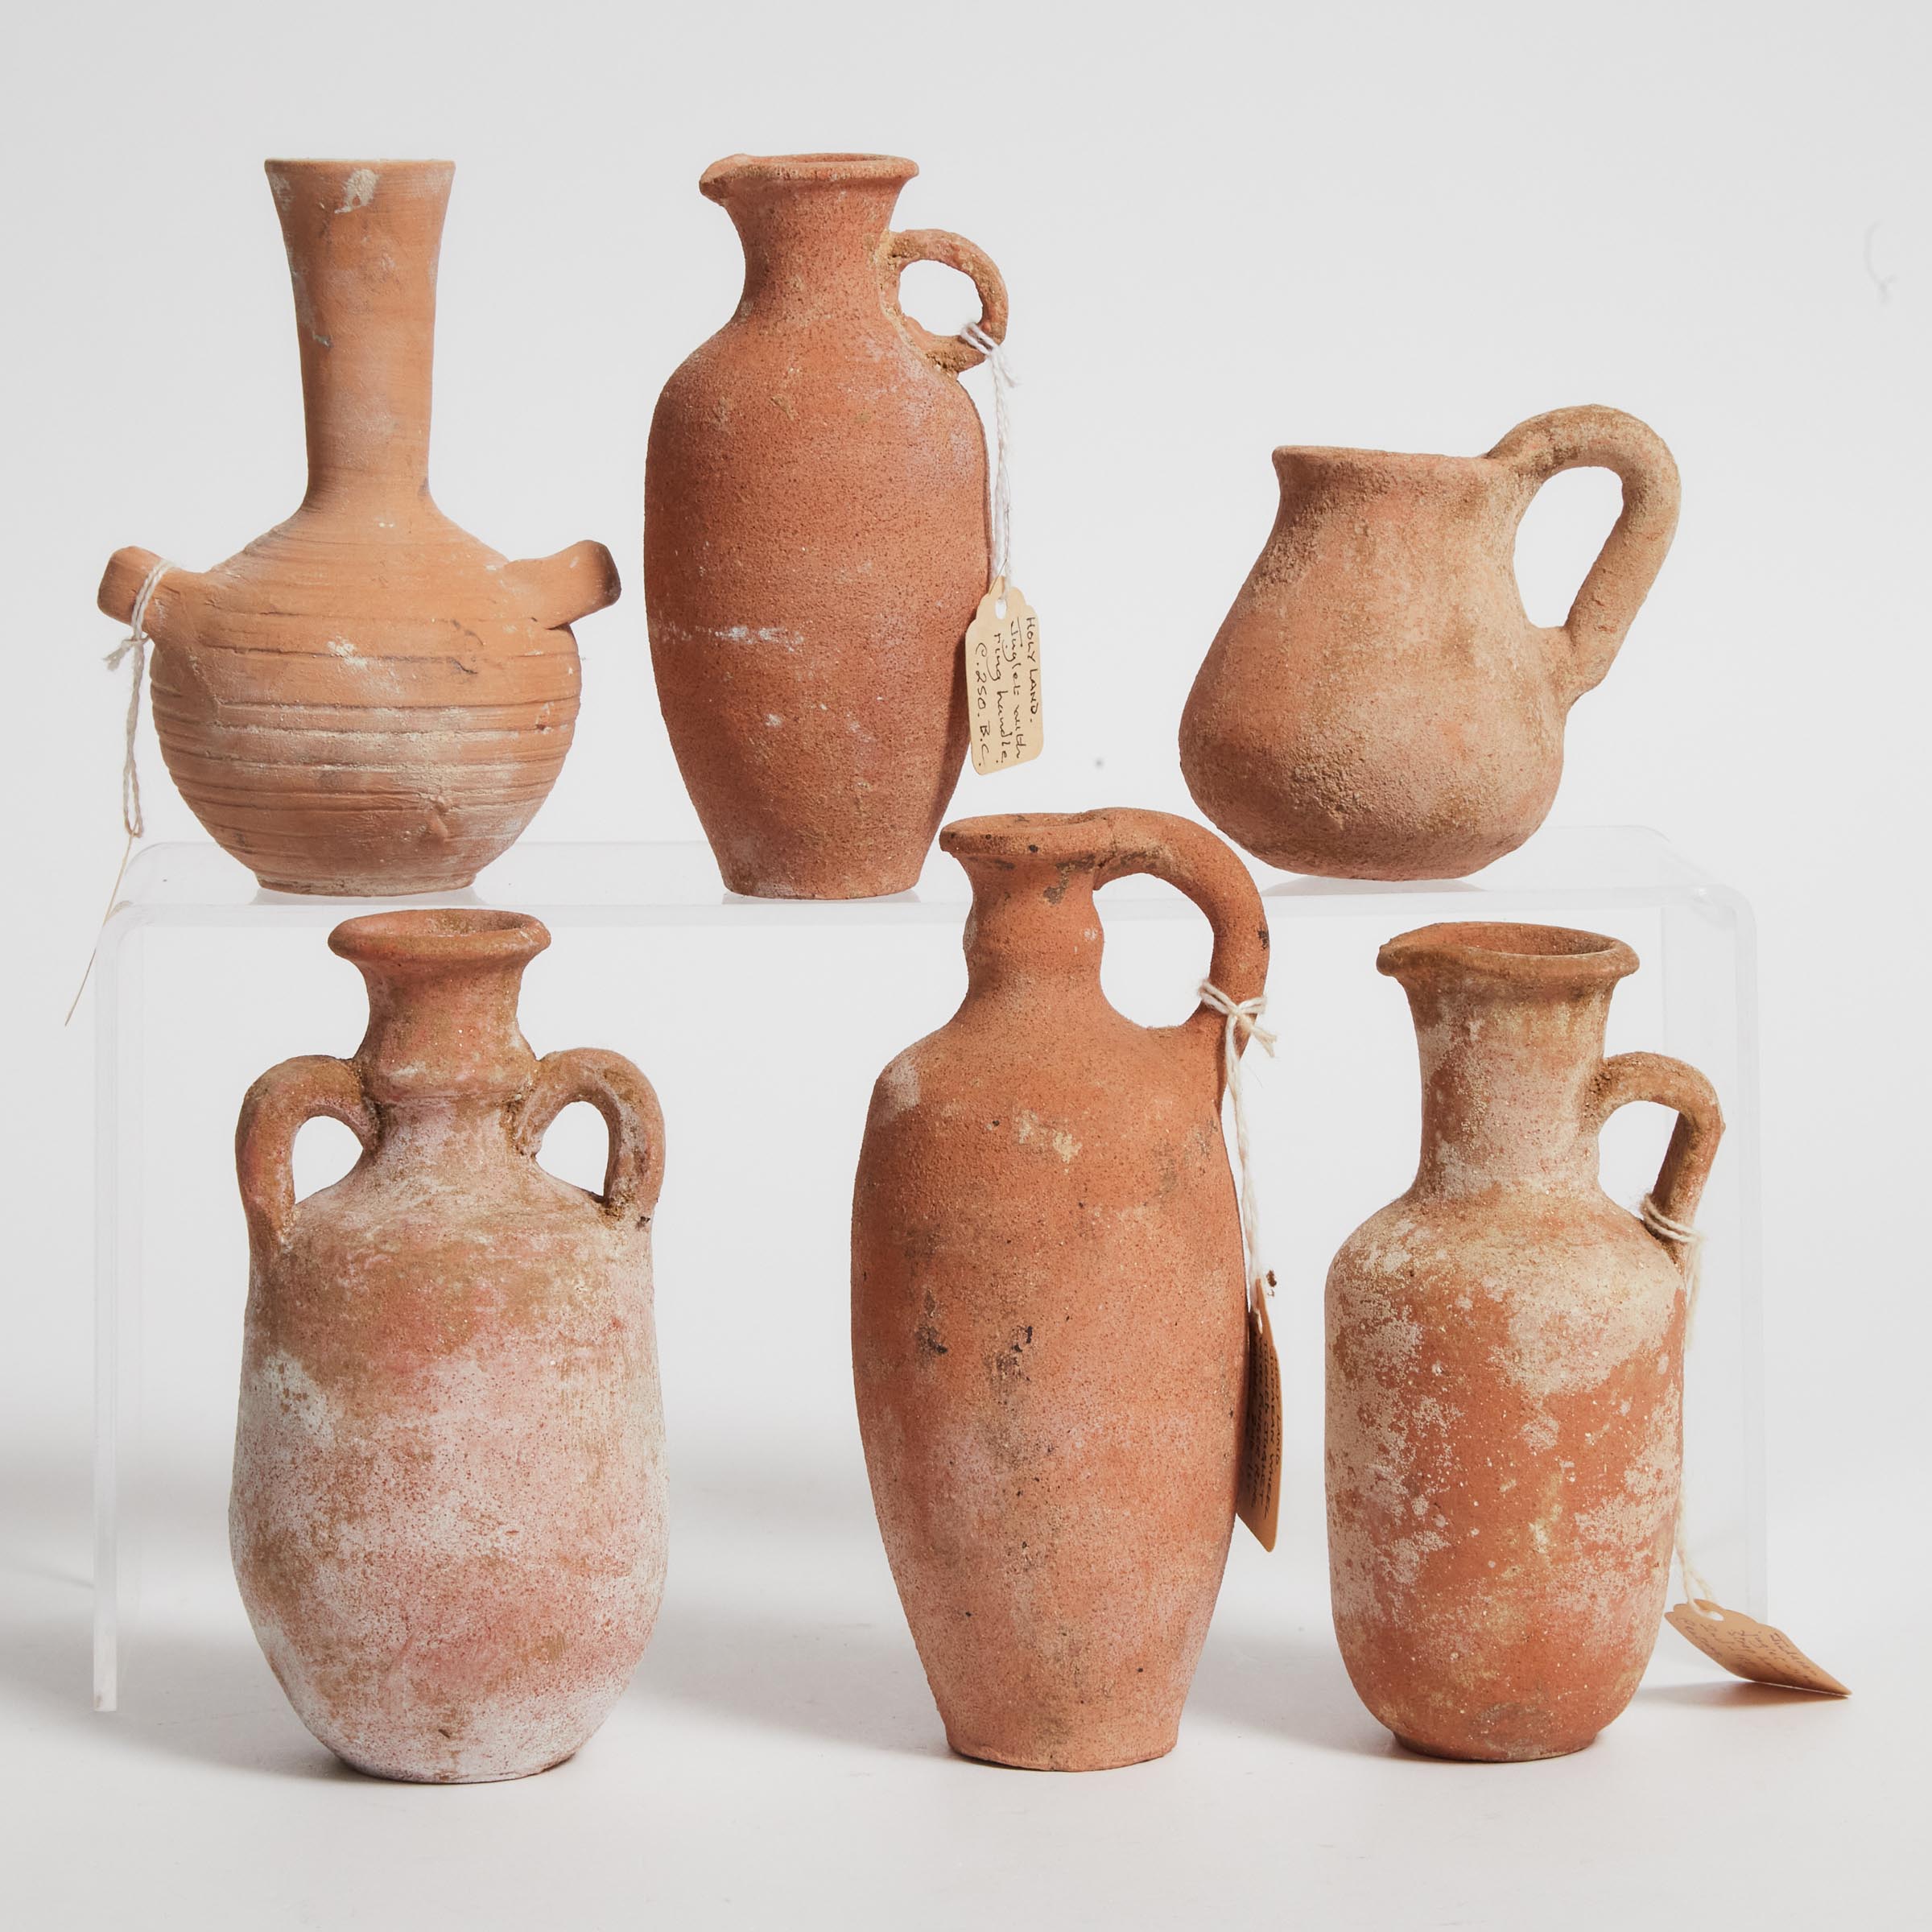 SIx Levantine Pottery Vessels  3c988c